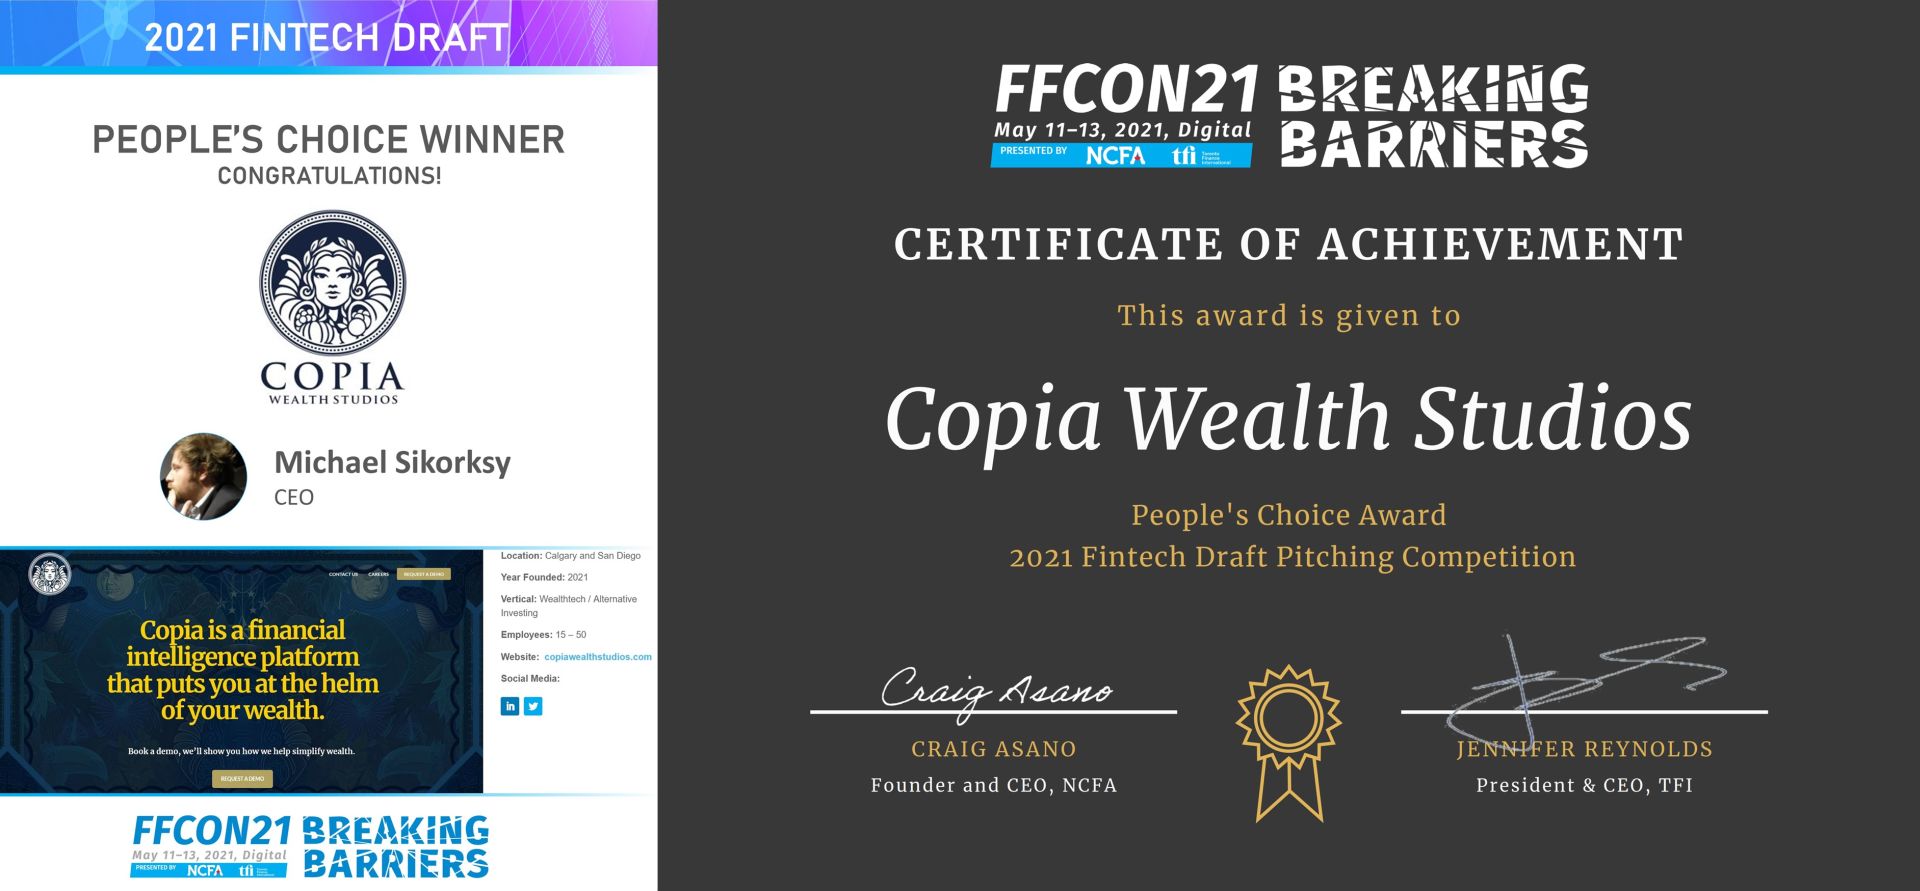 FFCON 2021 Fintech Draft People's Choice Winner - Copia Wealth Studios